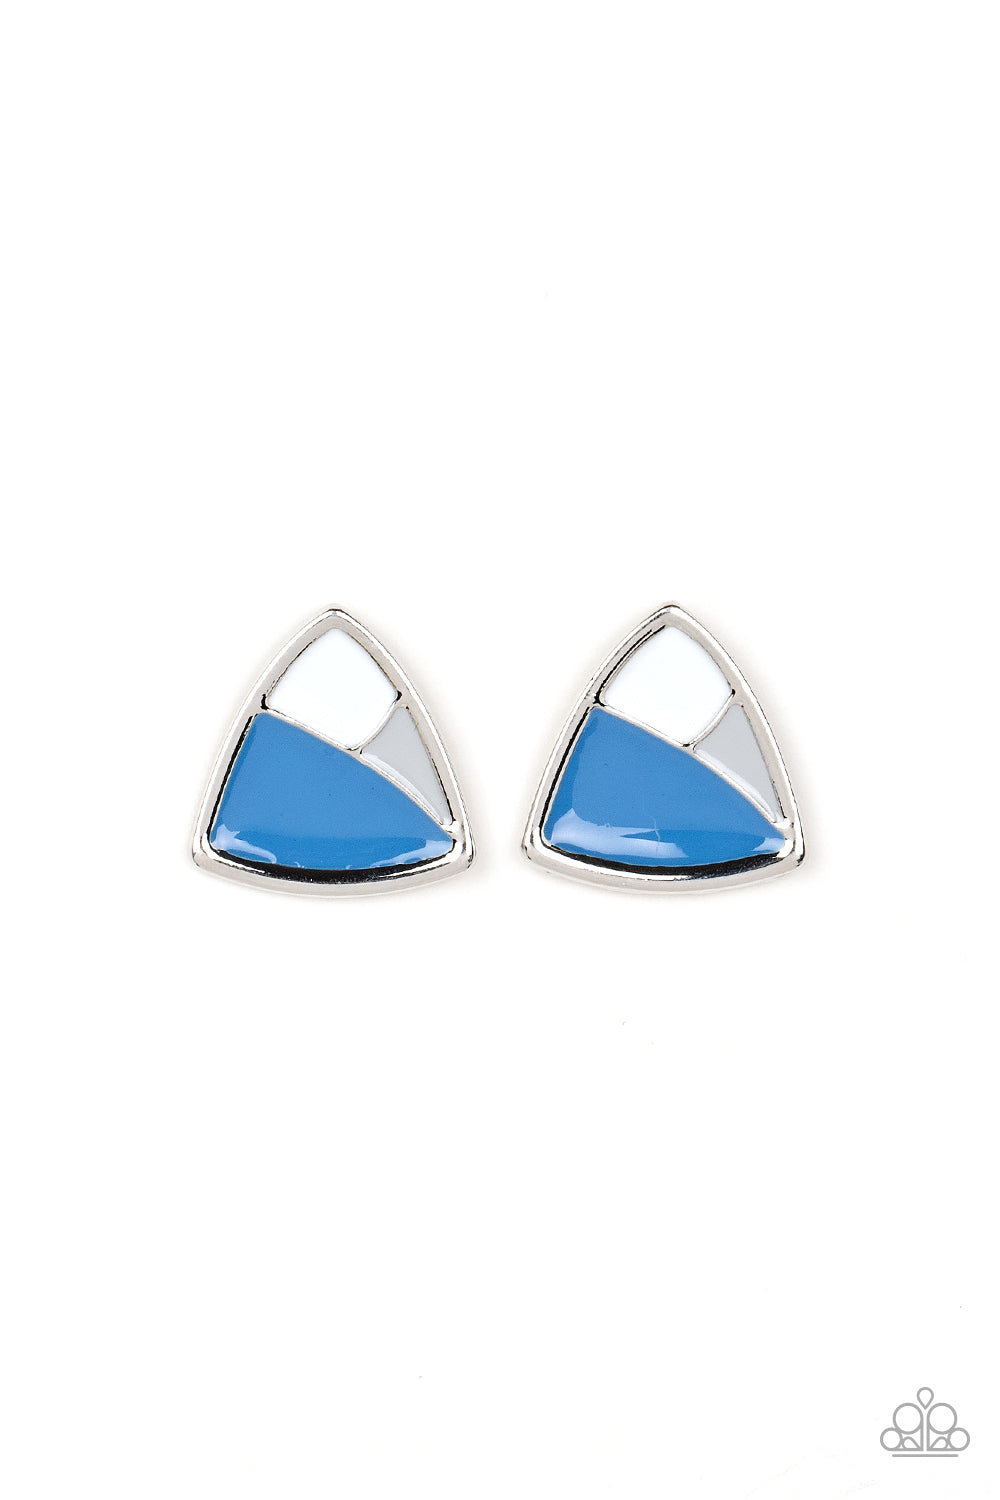 Kaleidoscopic Collision - blue - Paparazzi earrings